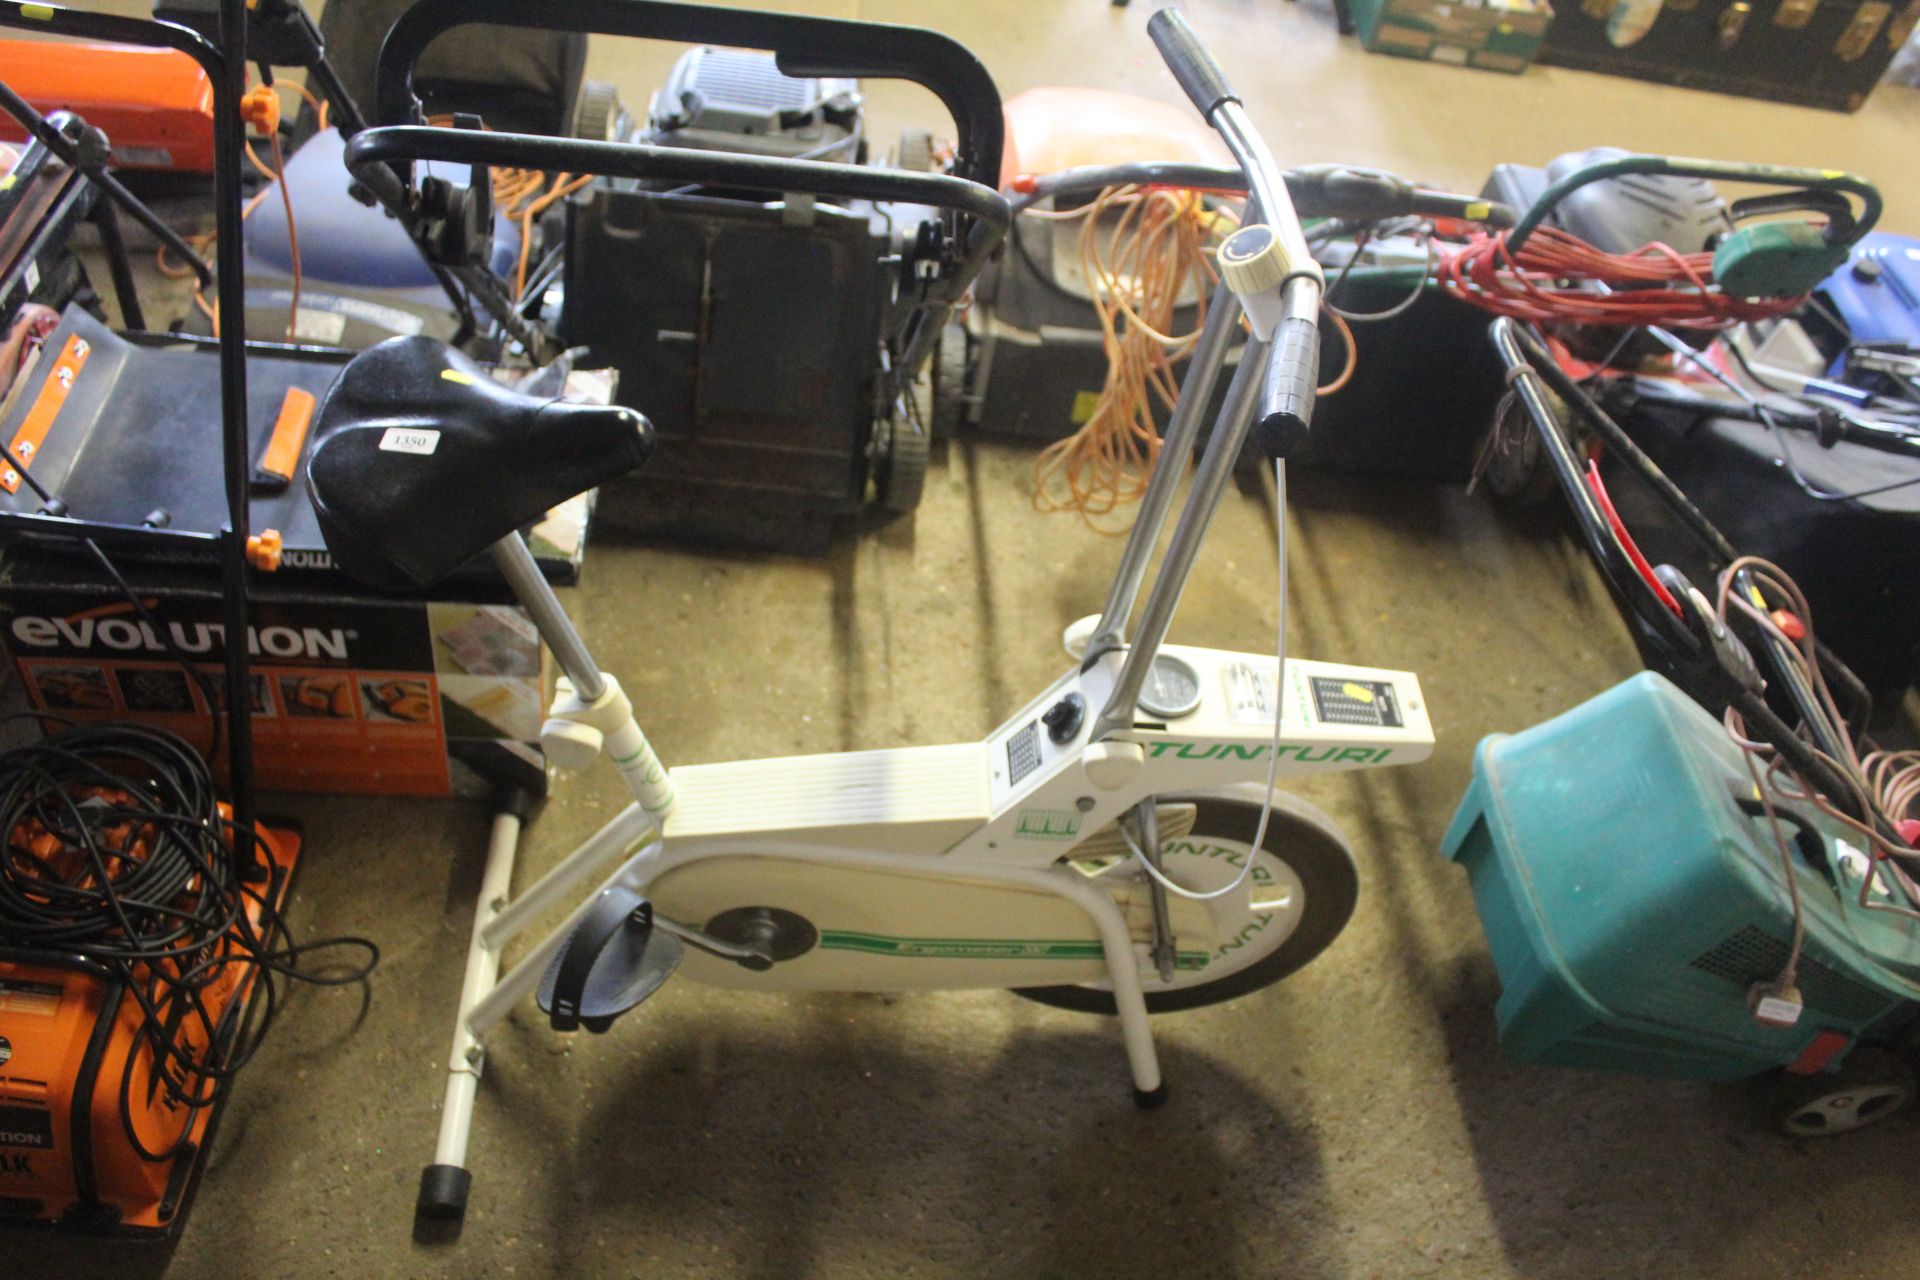 A Tunturi pedal exercise machine